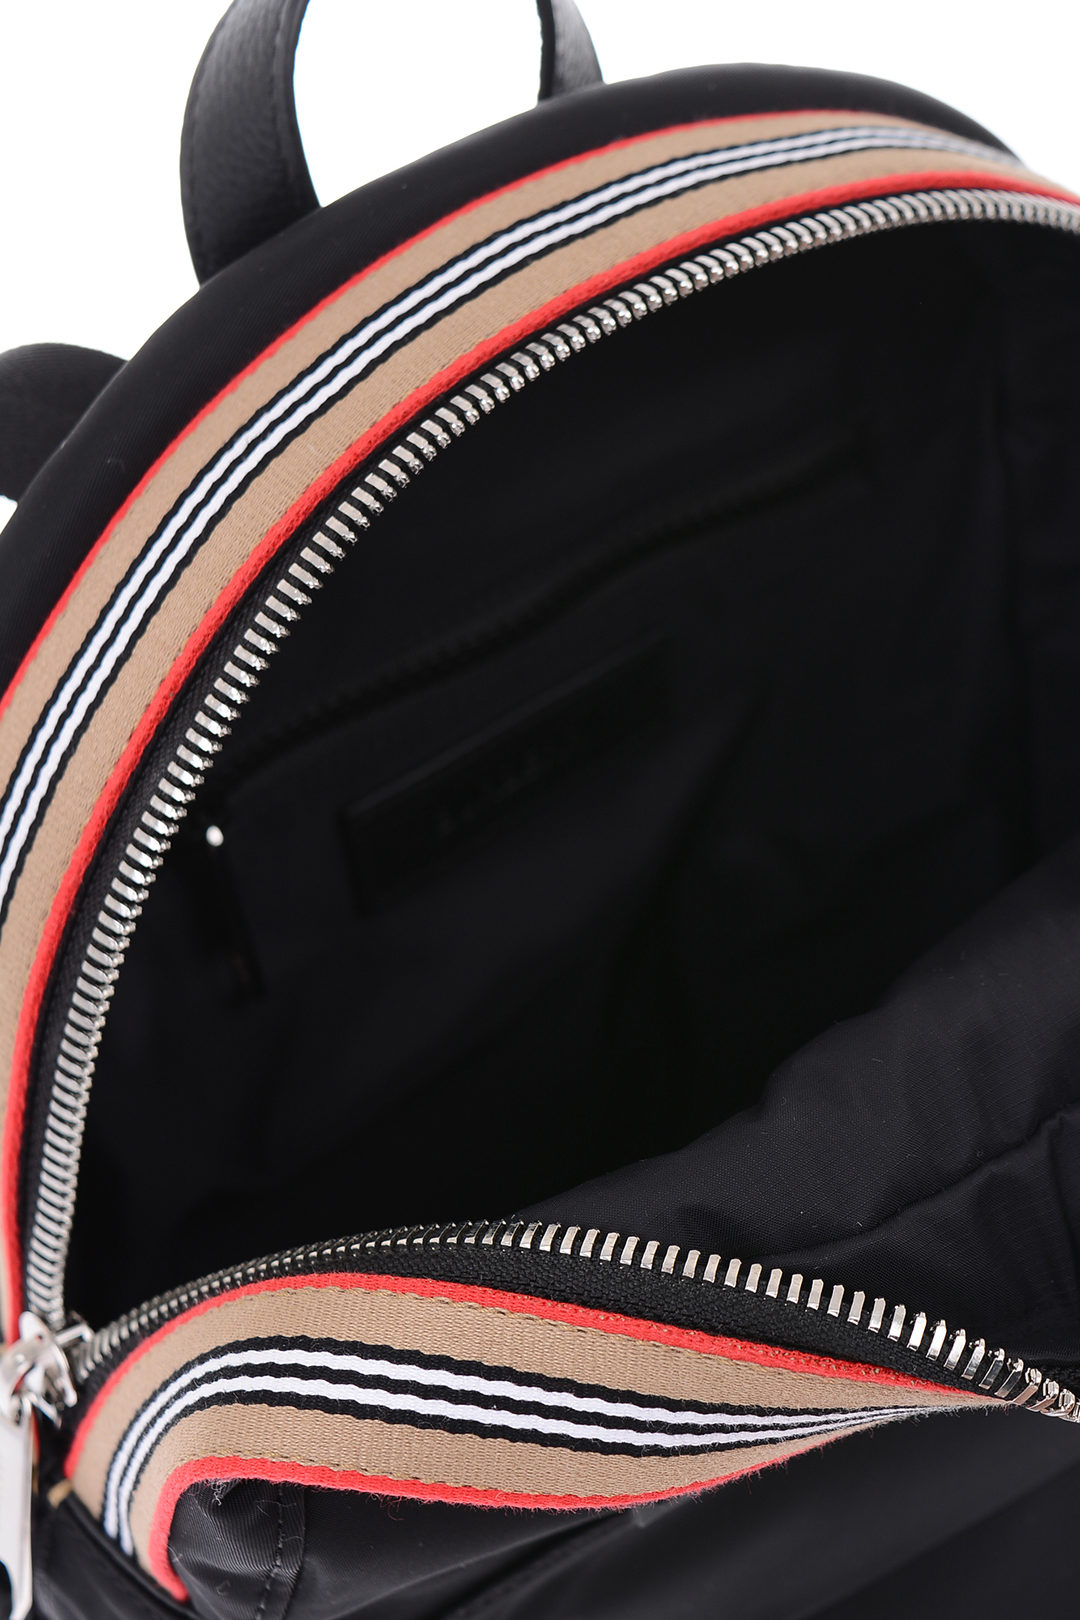 Burberry KIDS fabric NICO backpack boys - Glamood Outlet